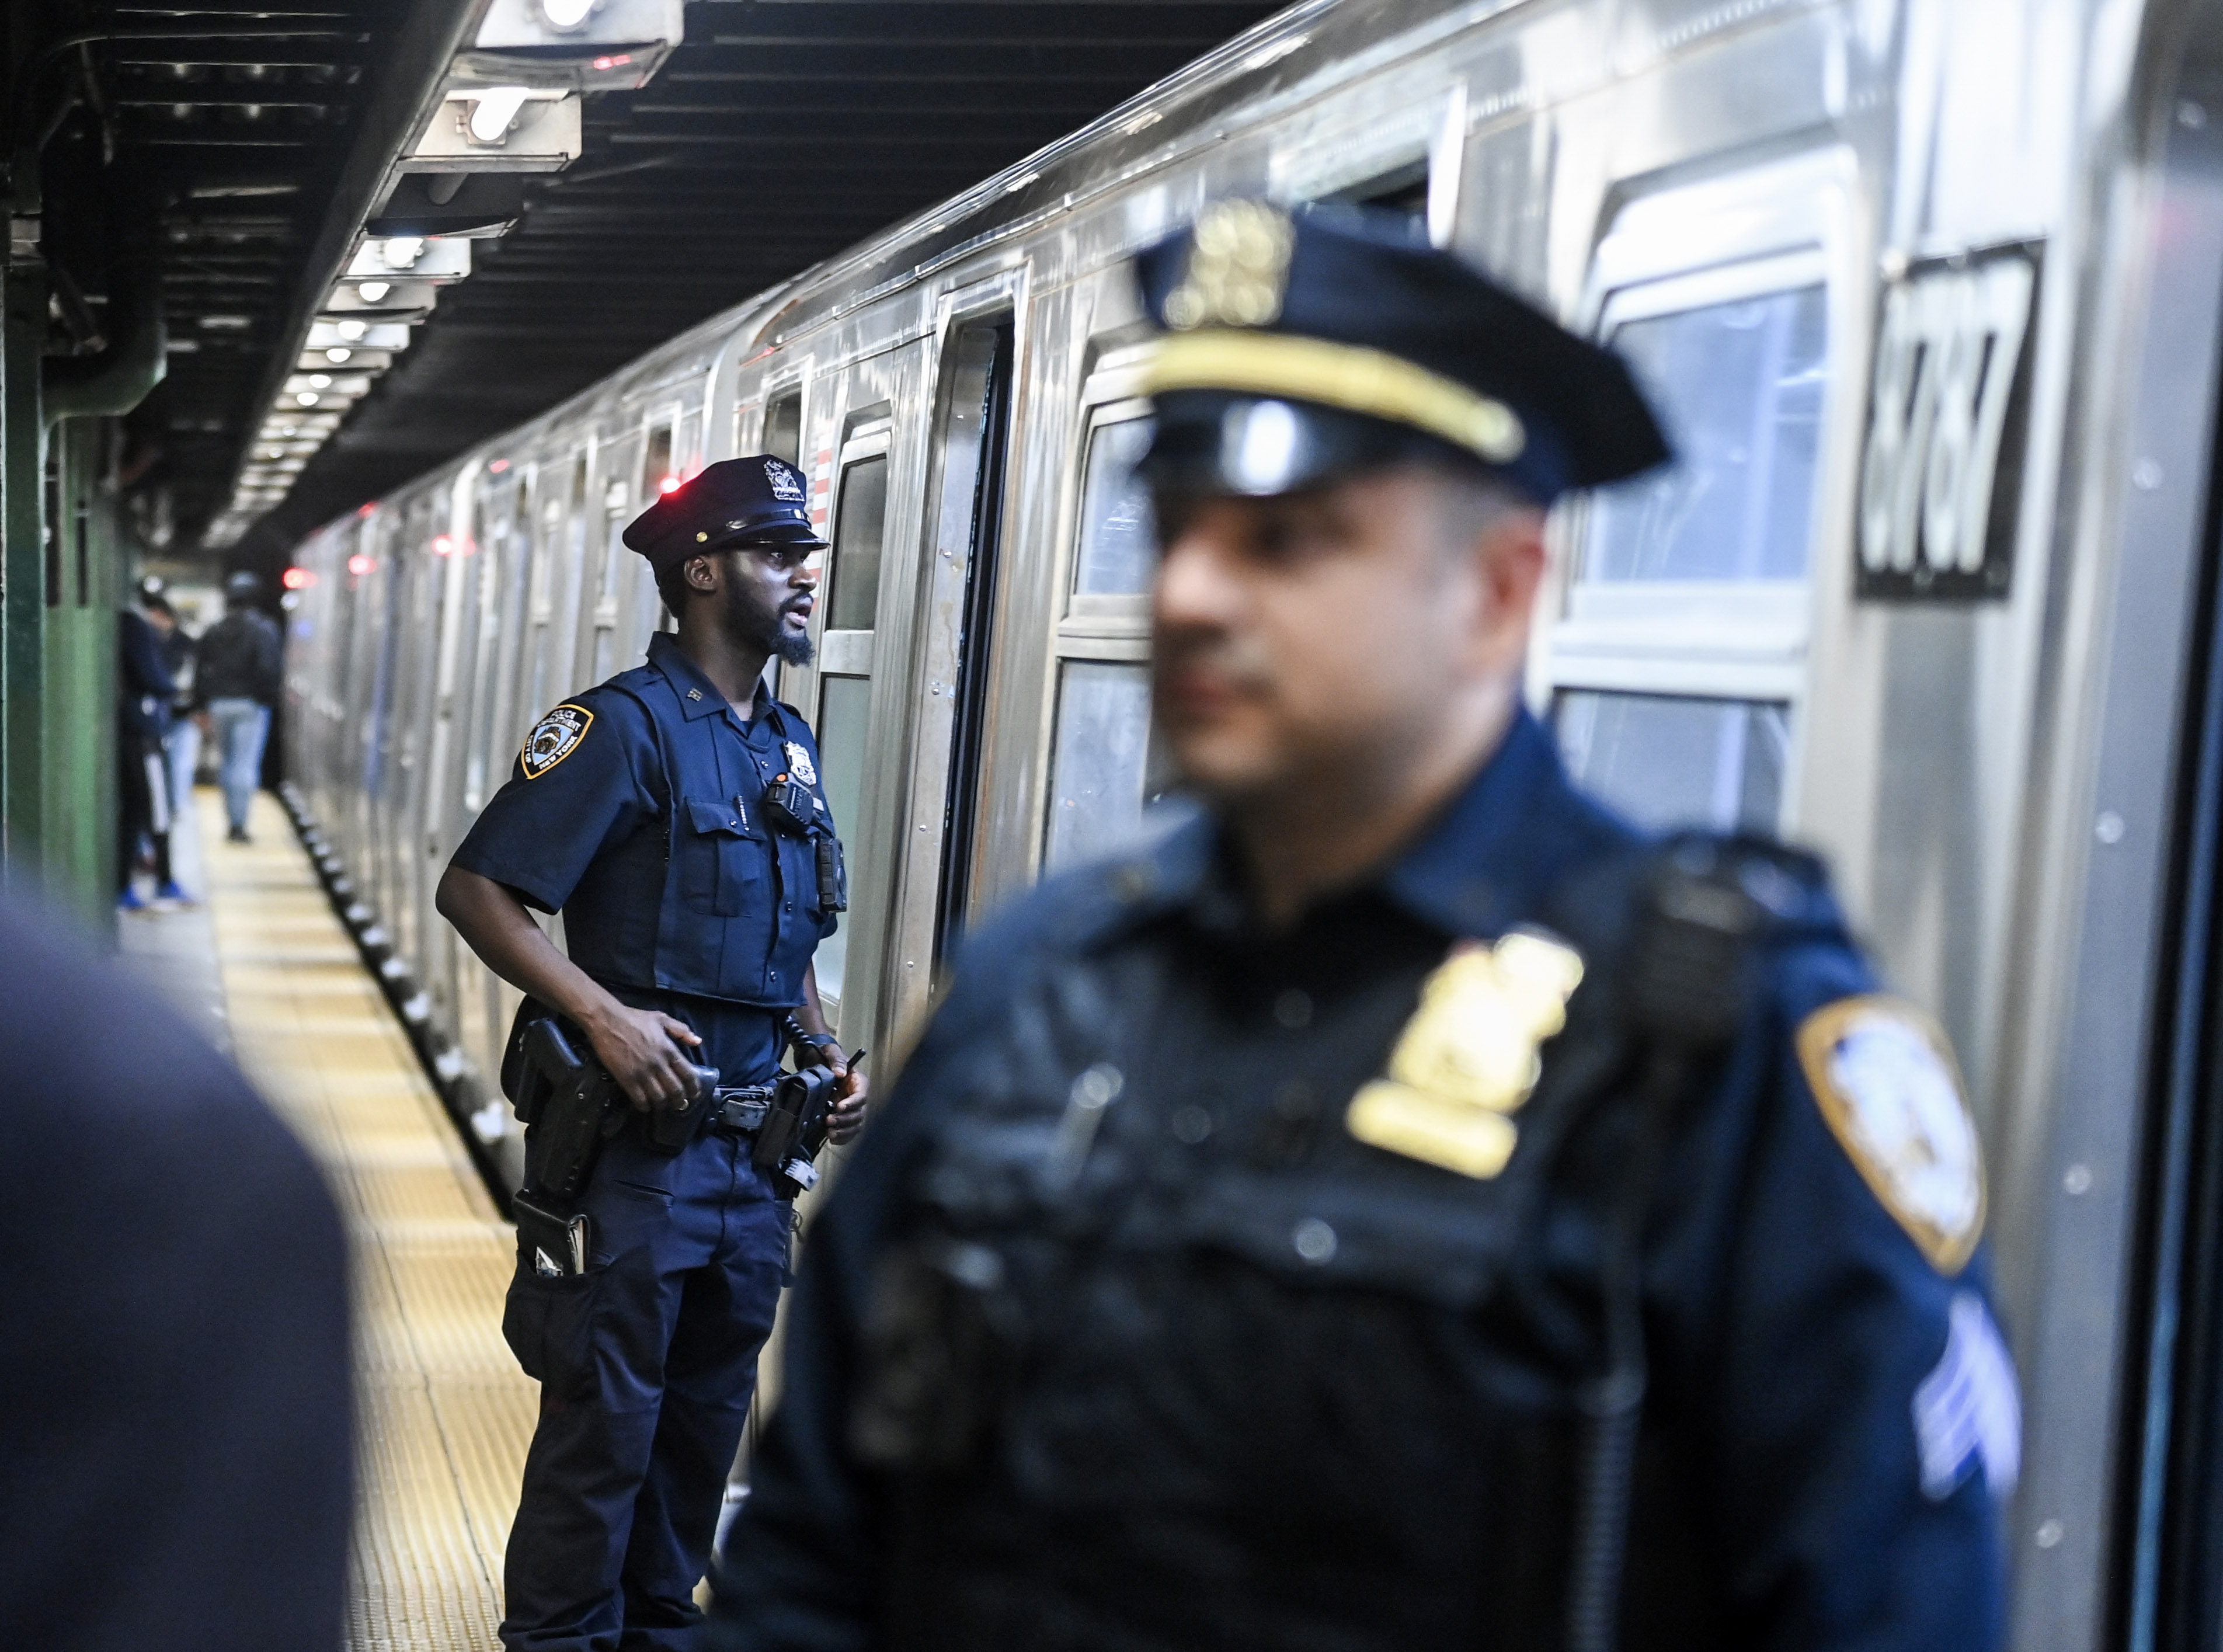 NYC Subway Sees Drop in Major Felonies Amid Increased Police Presence